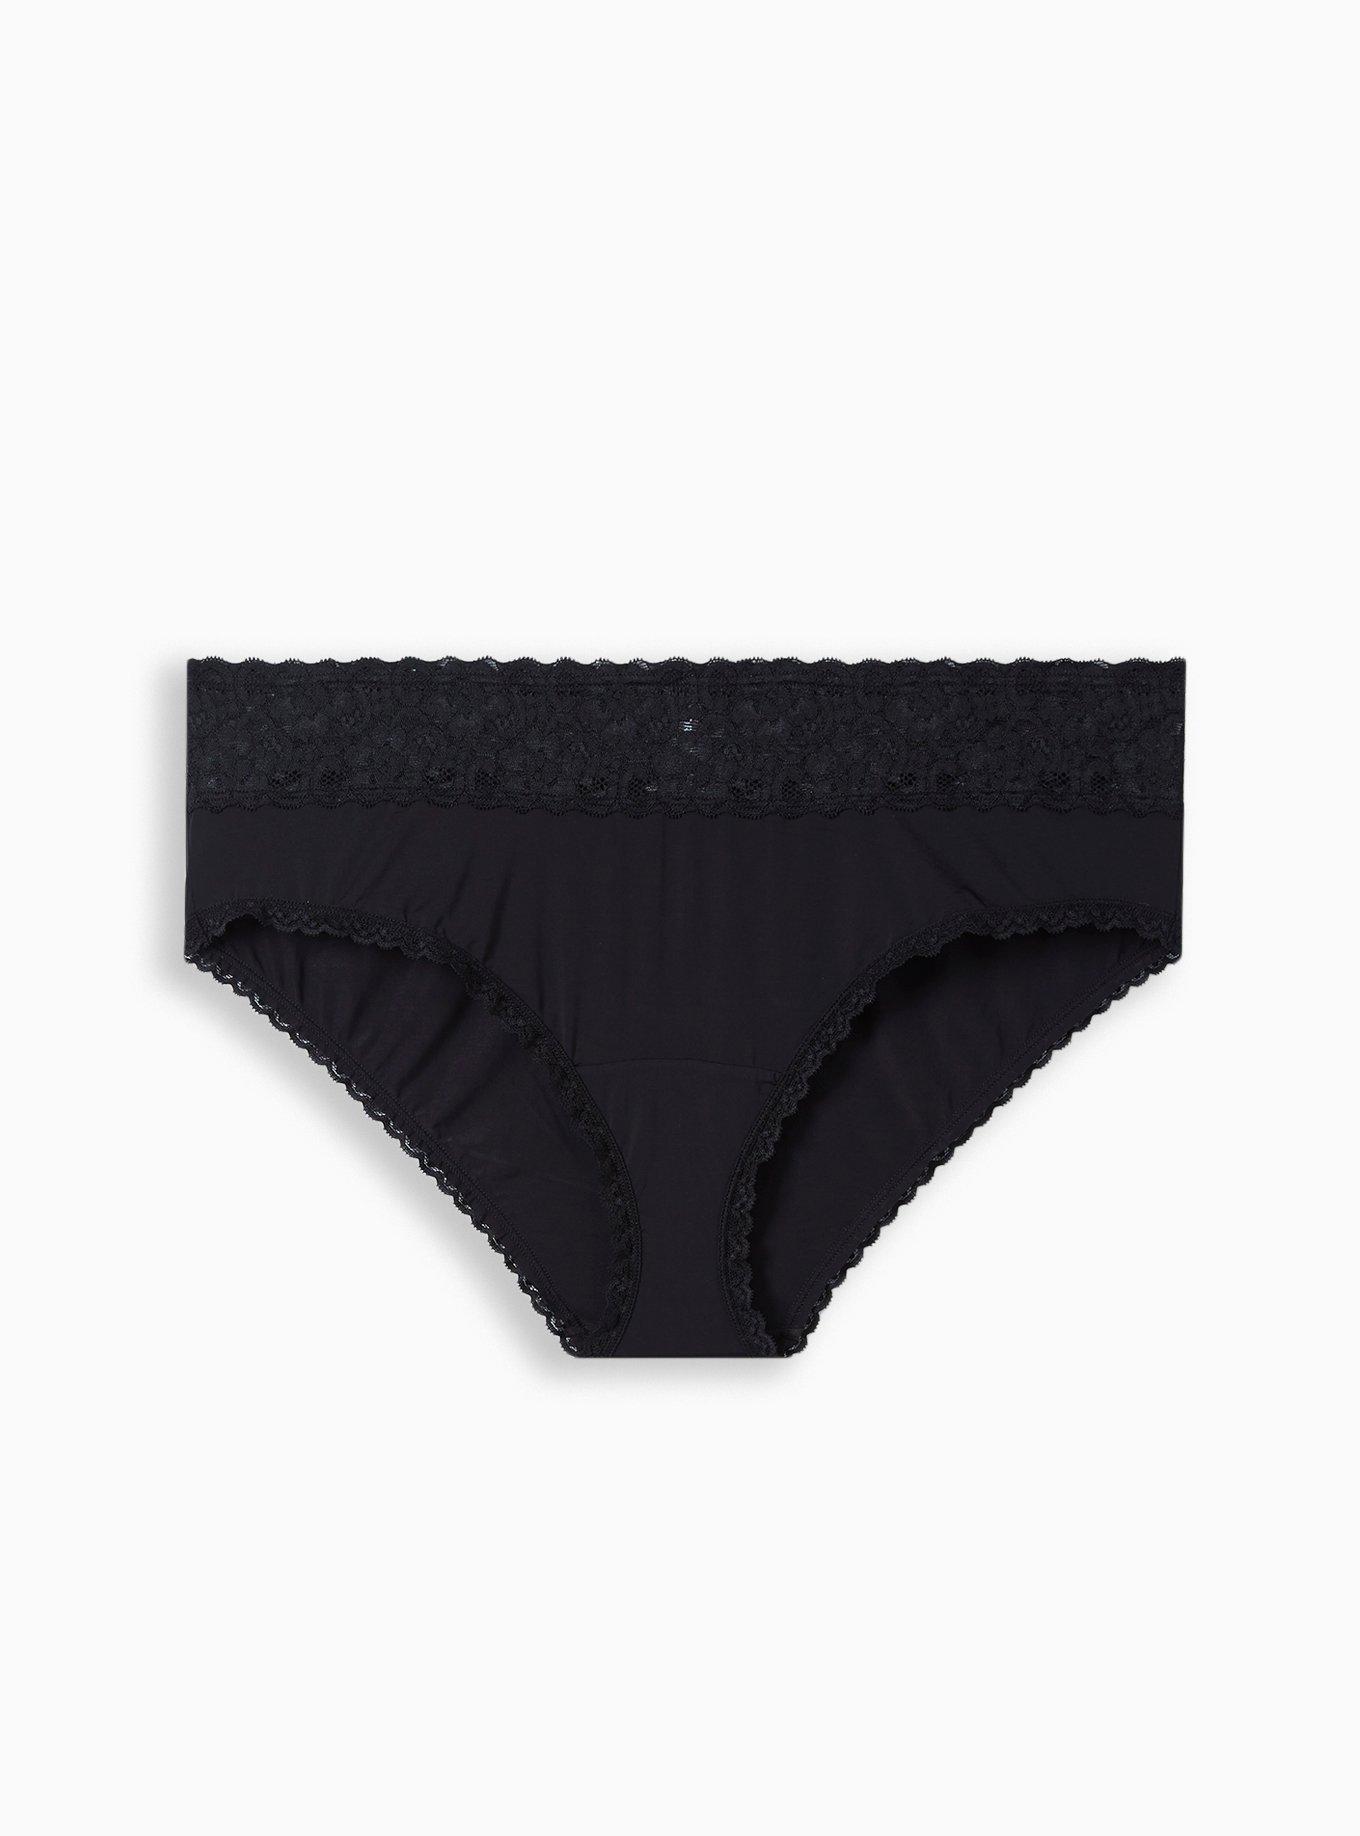 🆕Torrid set of 2 Panties  Torrid, Panties, Clothes design